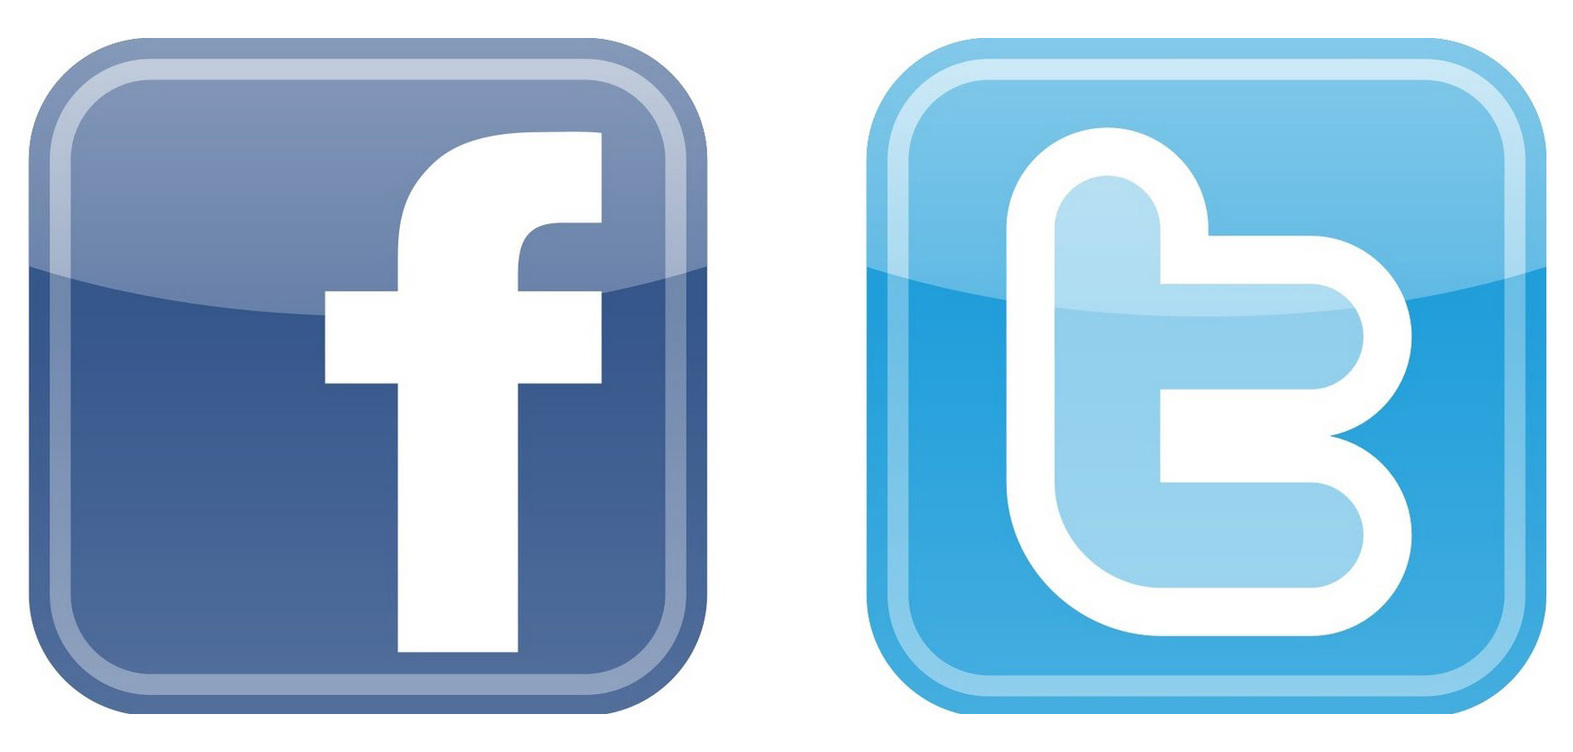 Imagenes de logo de facebook clipart free to use clip art resource